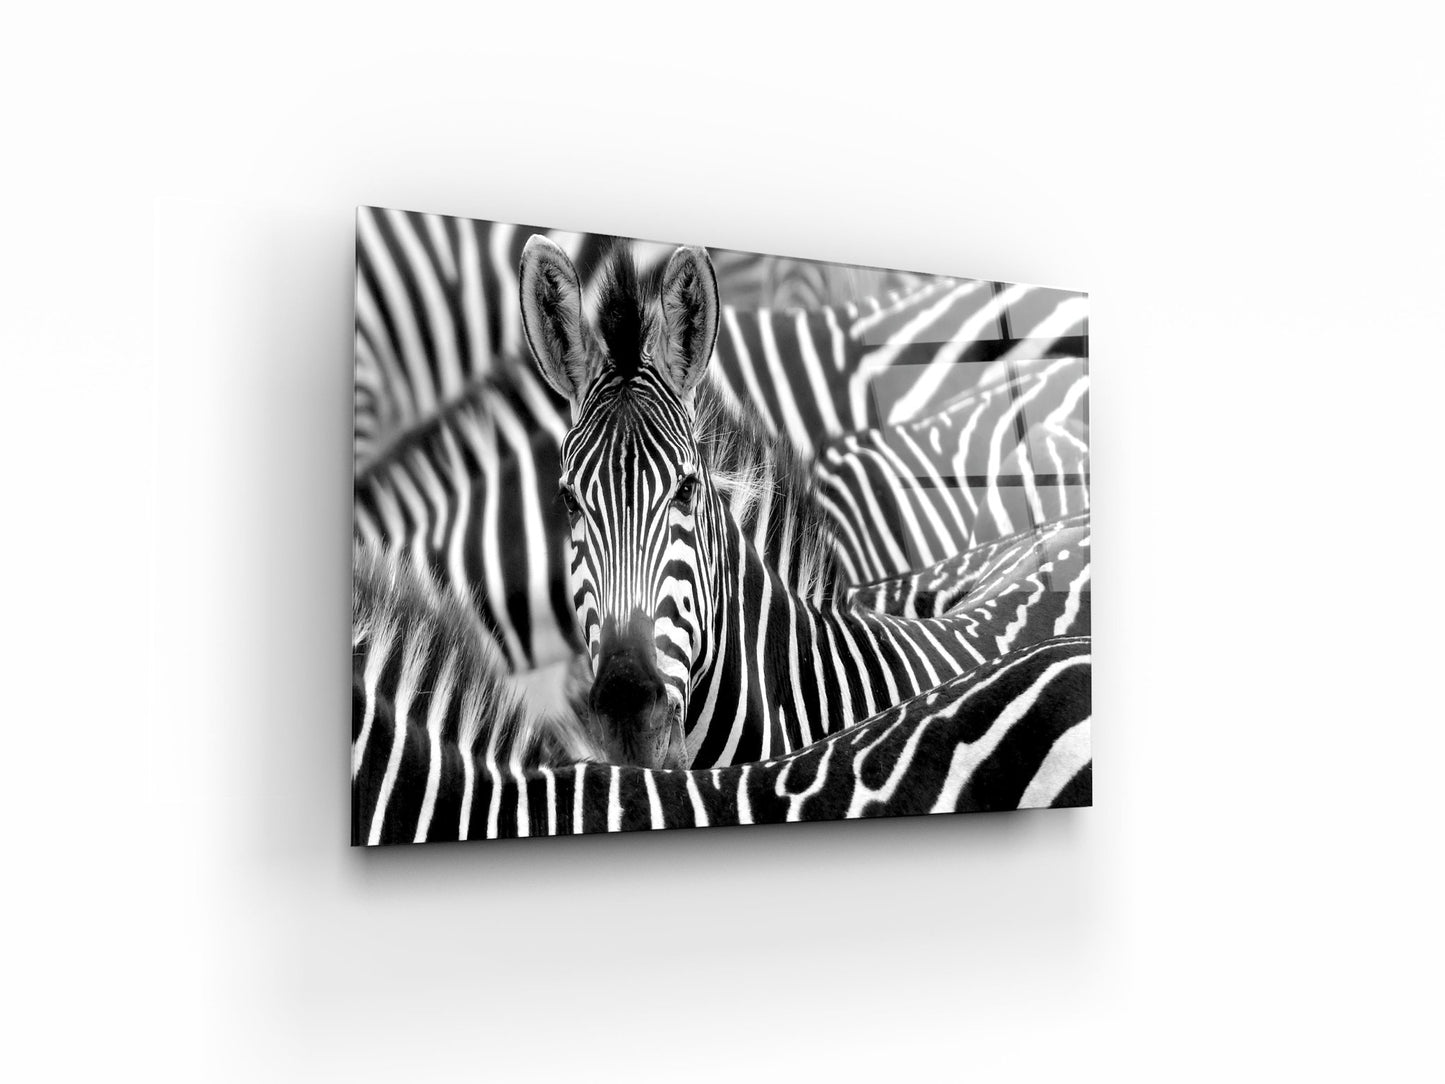 Zebra in Black and White - OCP TINY THINGS